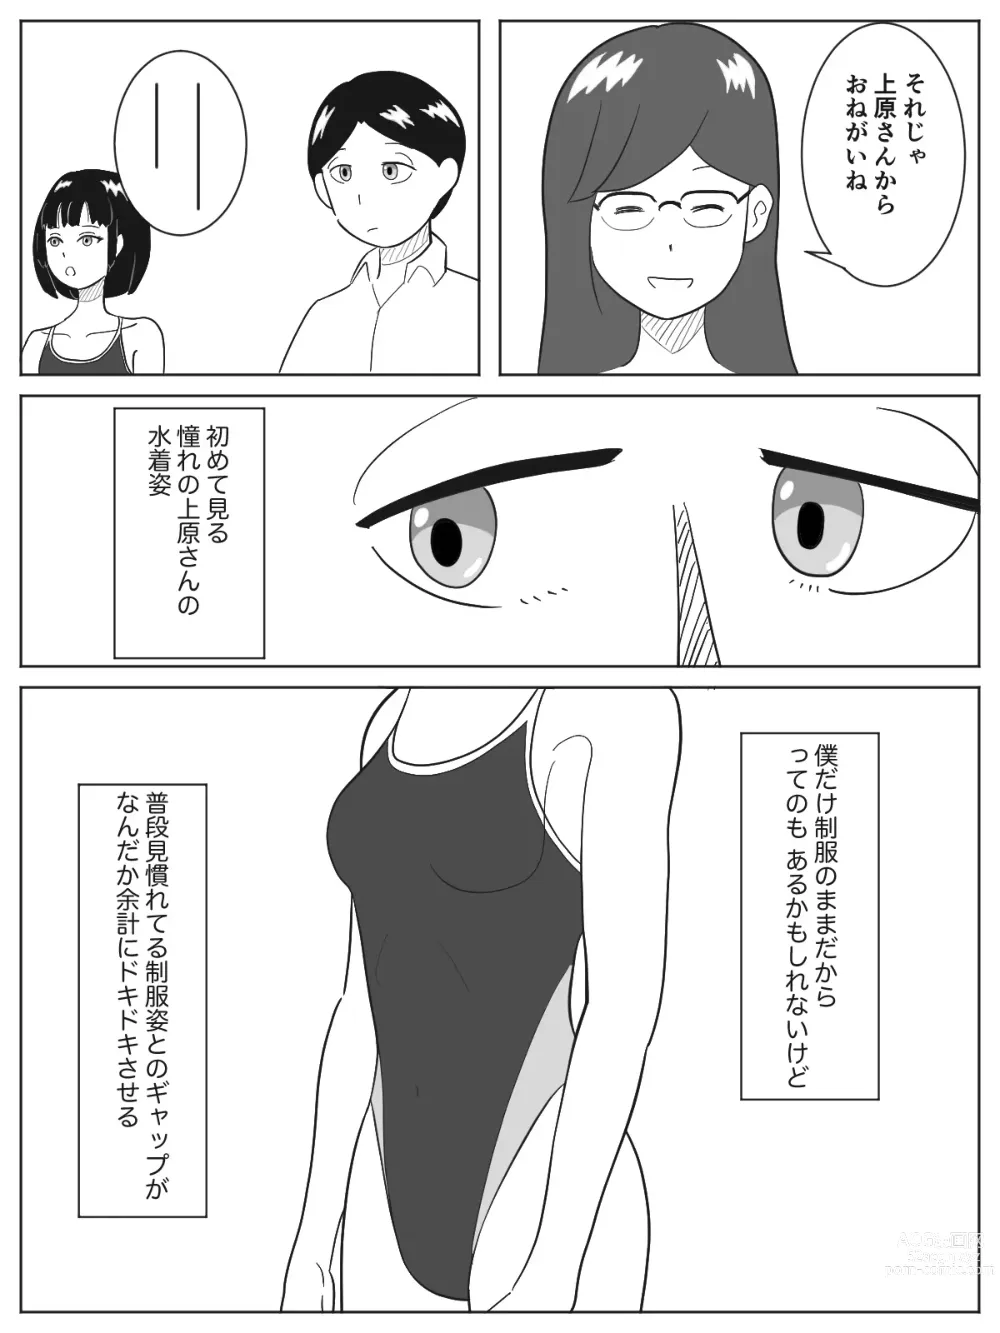 Page 5 of doujinshi Danjo Kyoudou Koi-shitsu